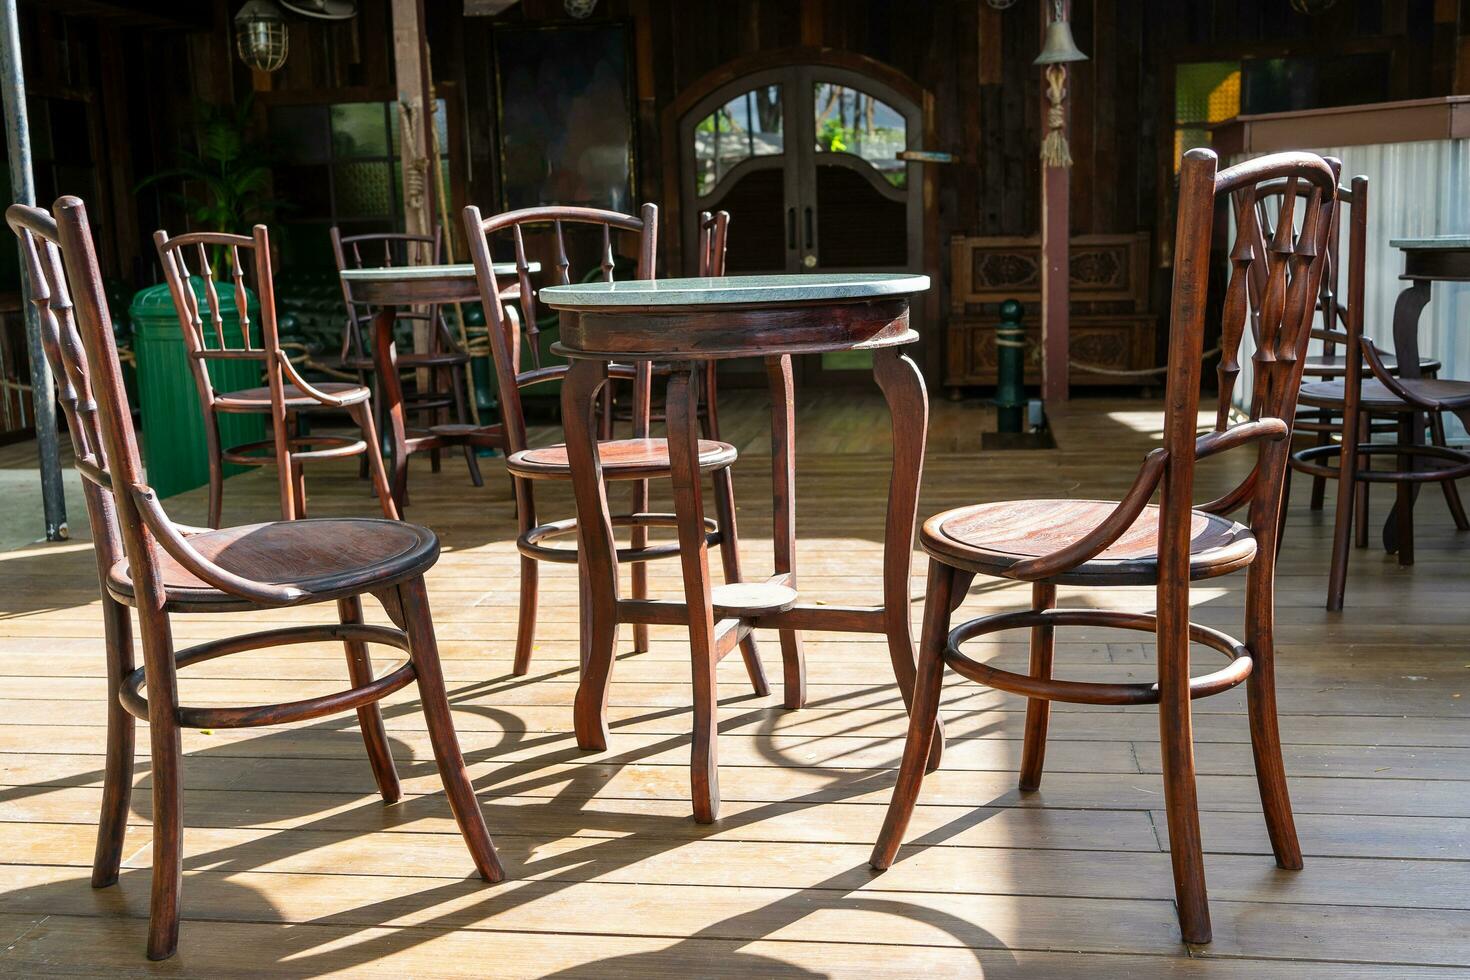 Restaurant wooden chairs against morning sunlight photo